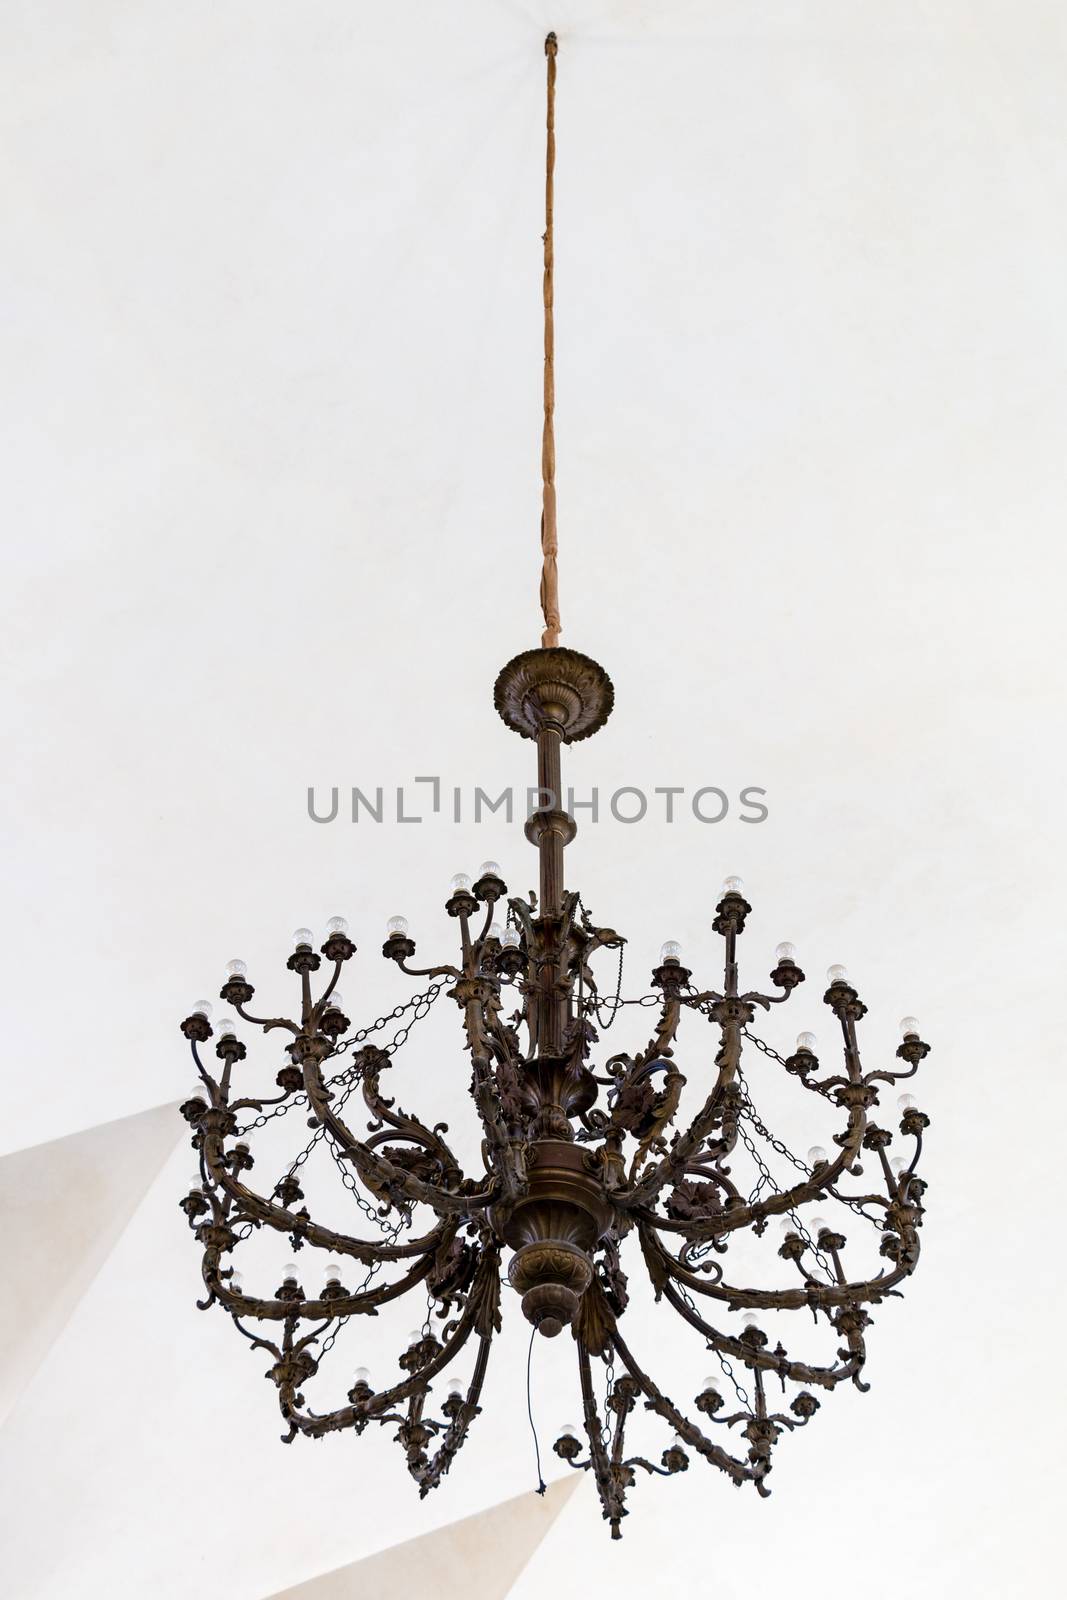 Antique chandelier by bolkan73